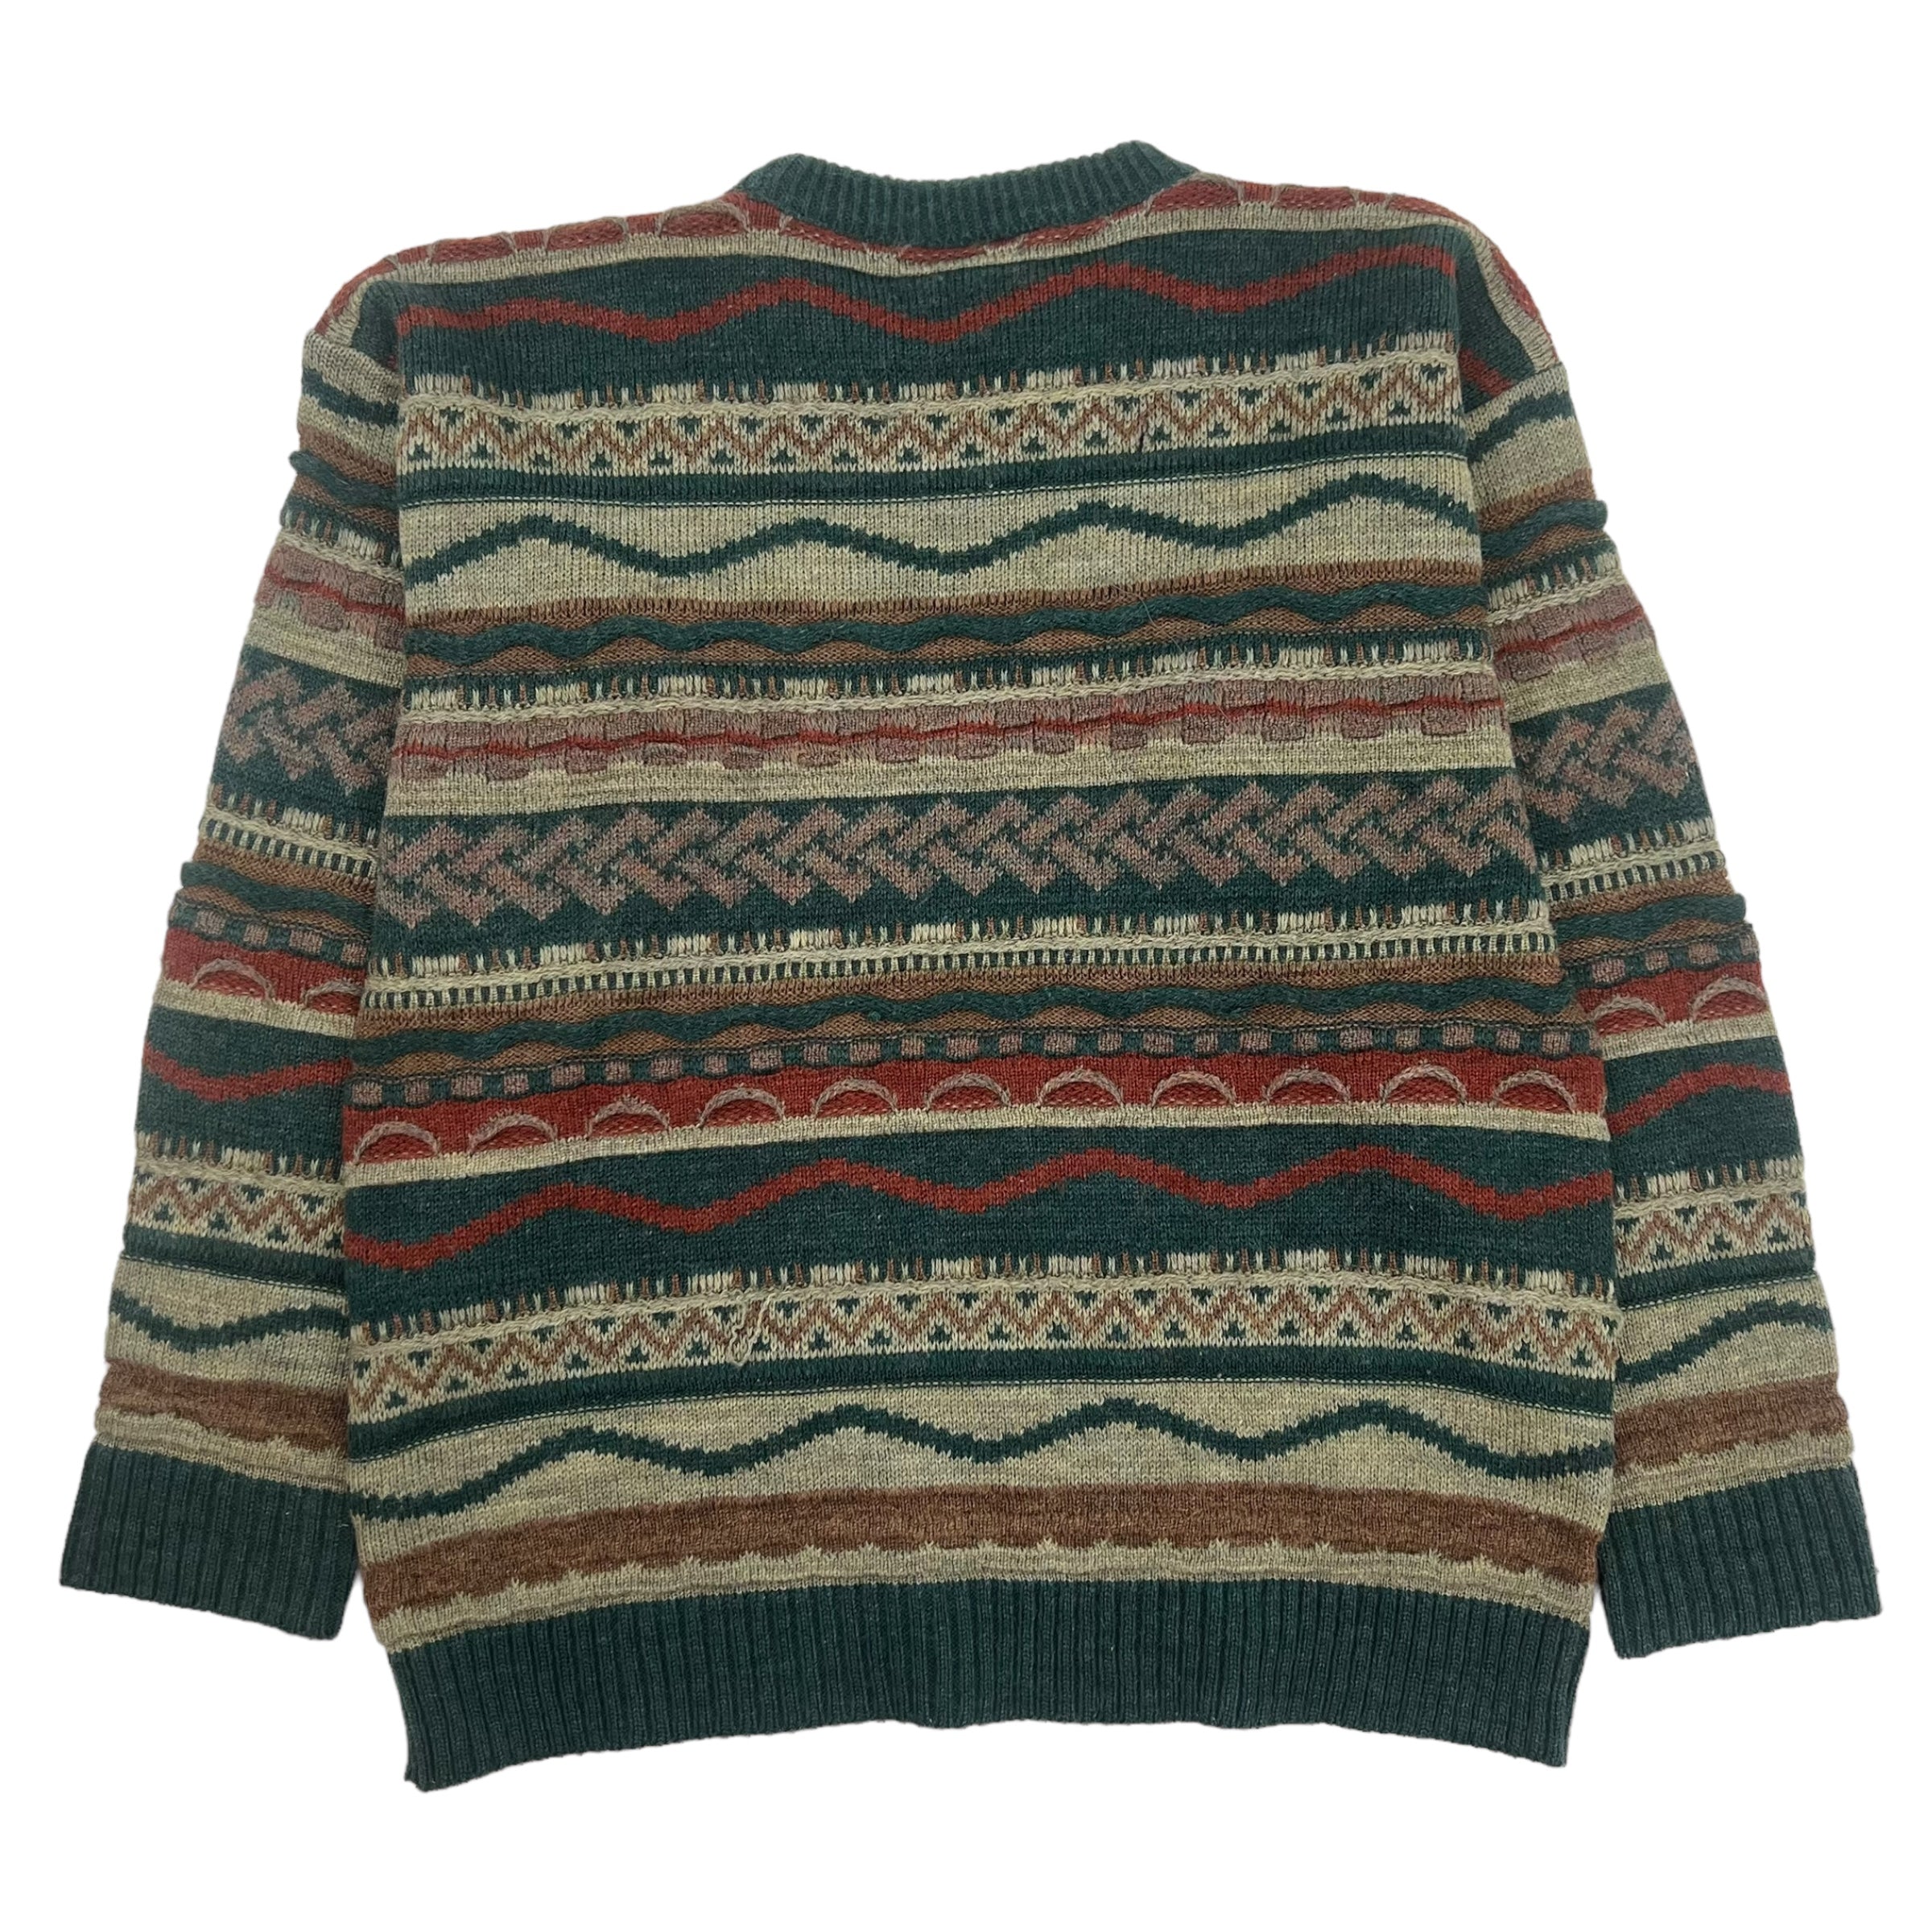 Vintage Phildar Patterned Knit Sweater Green